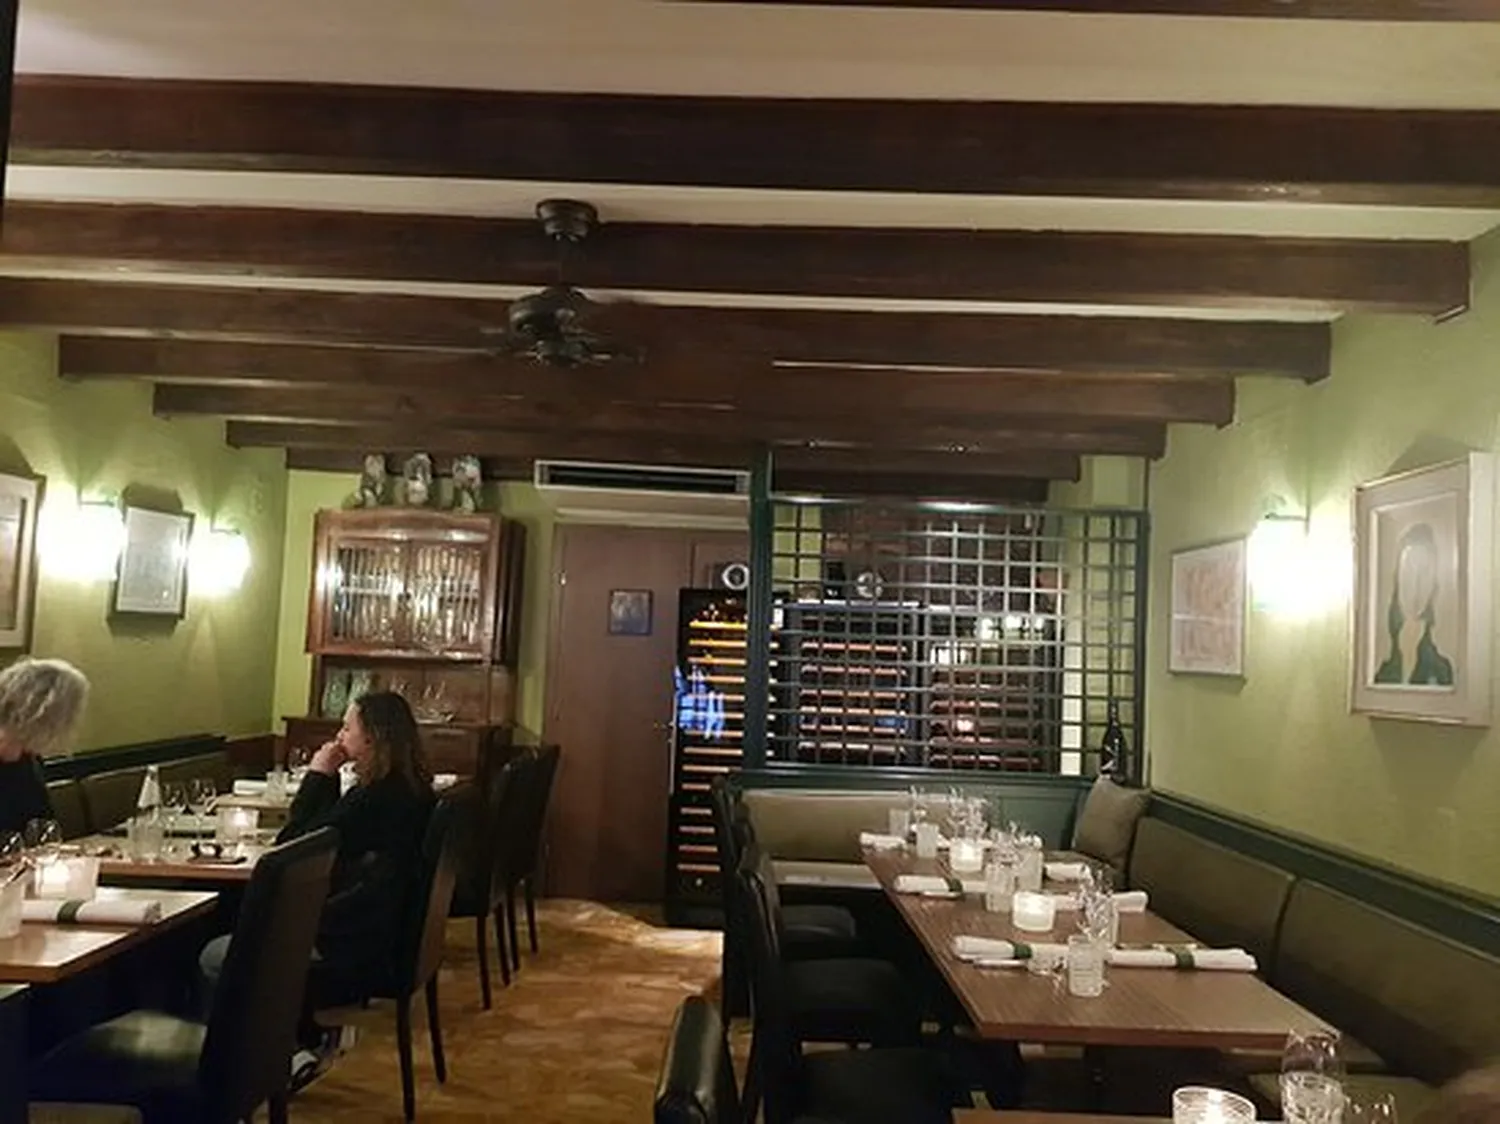 Al Covo restaurant Venise